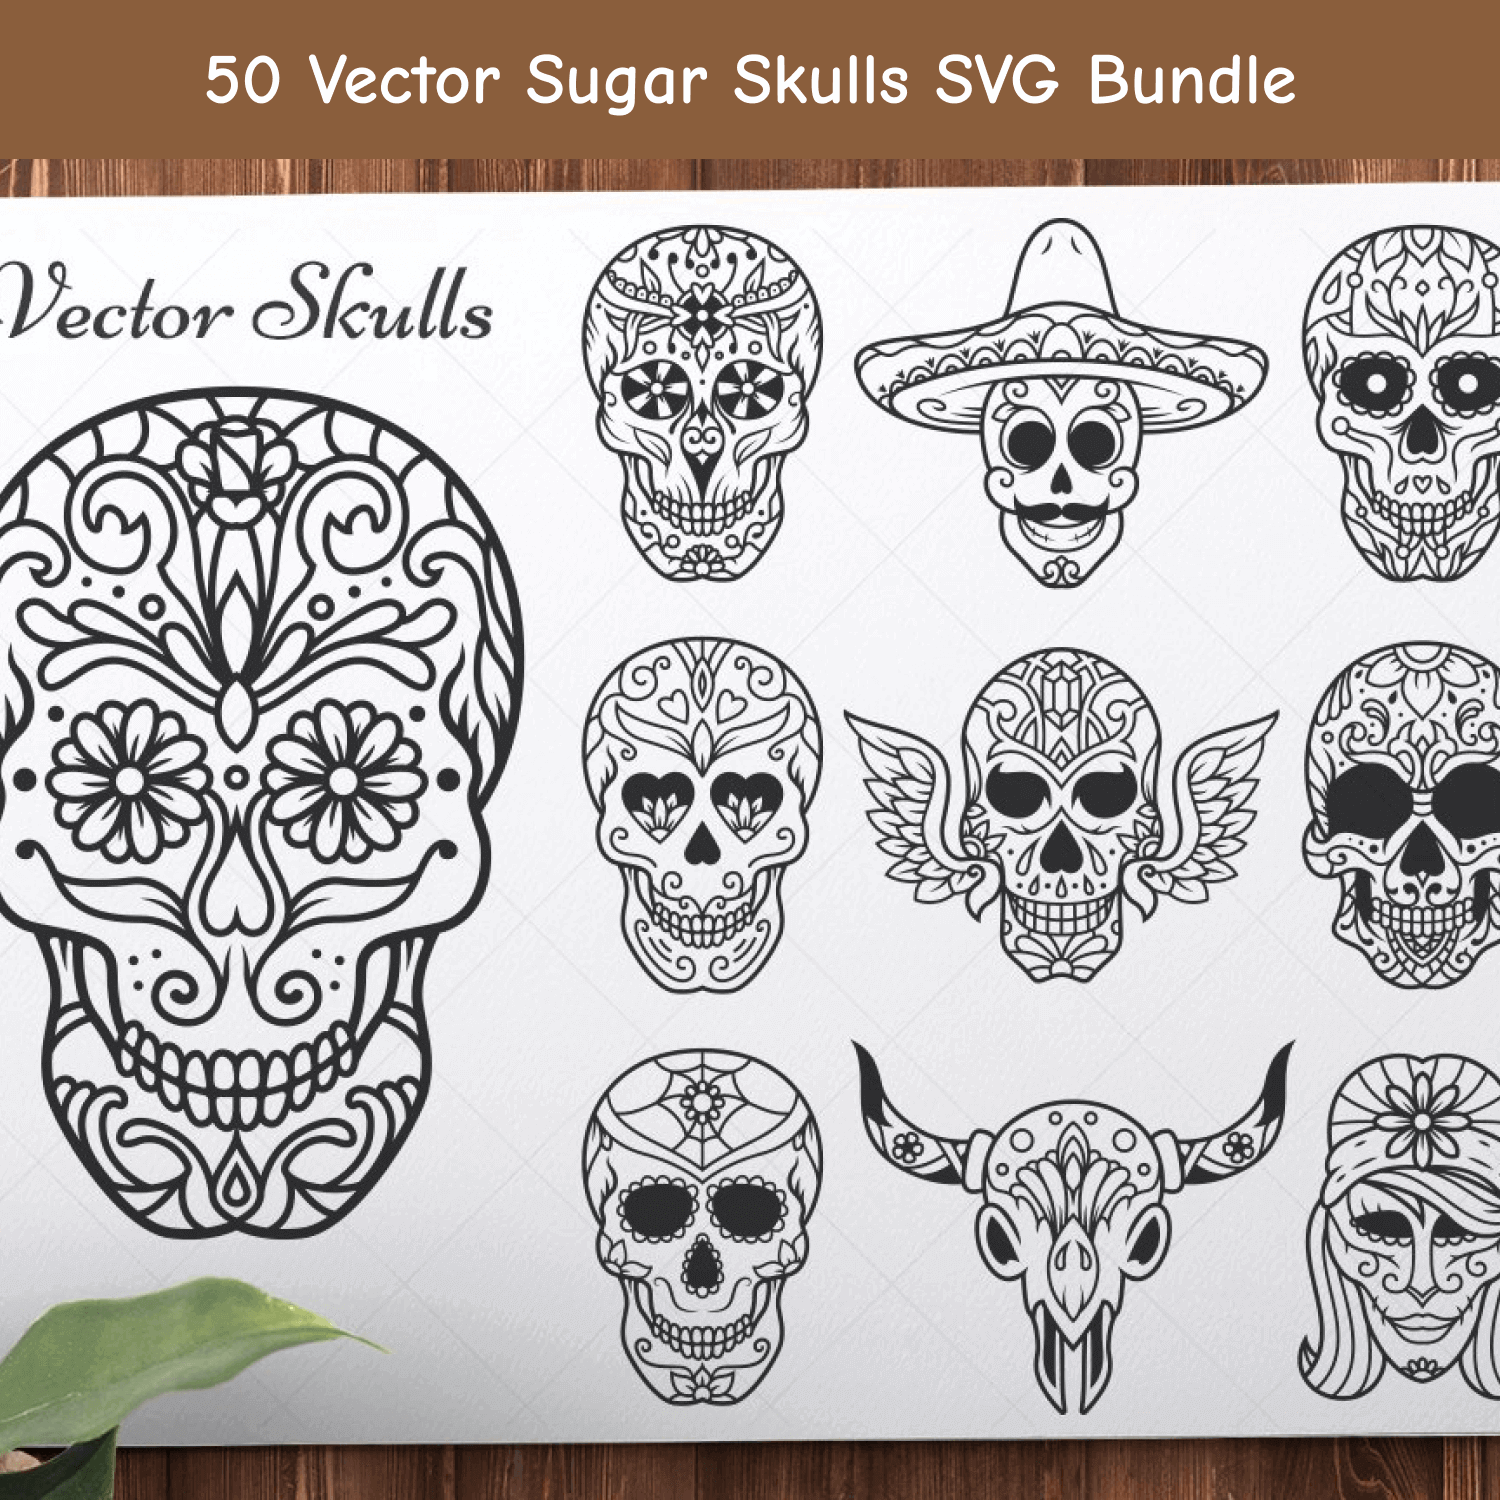 50 Vector Sugar Skulls SVG Bundle.